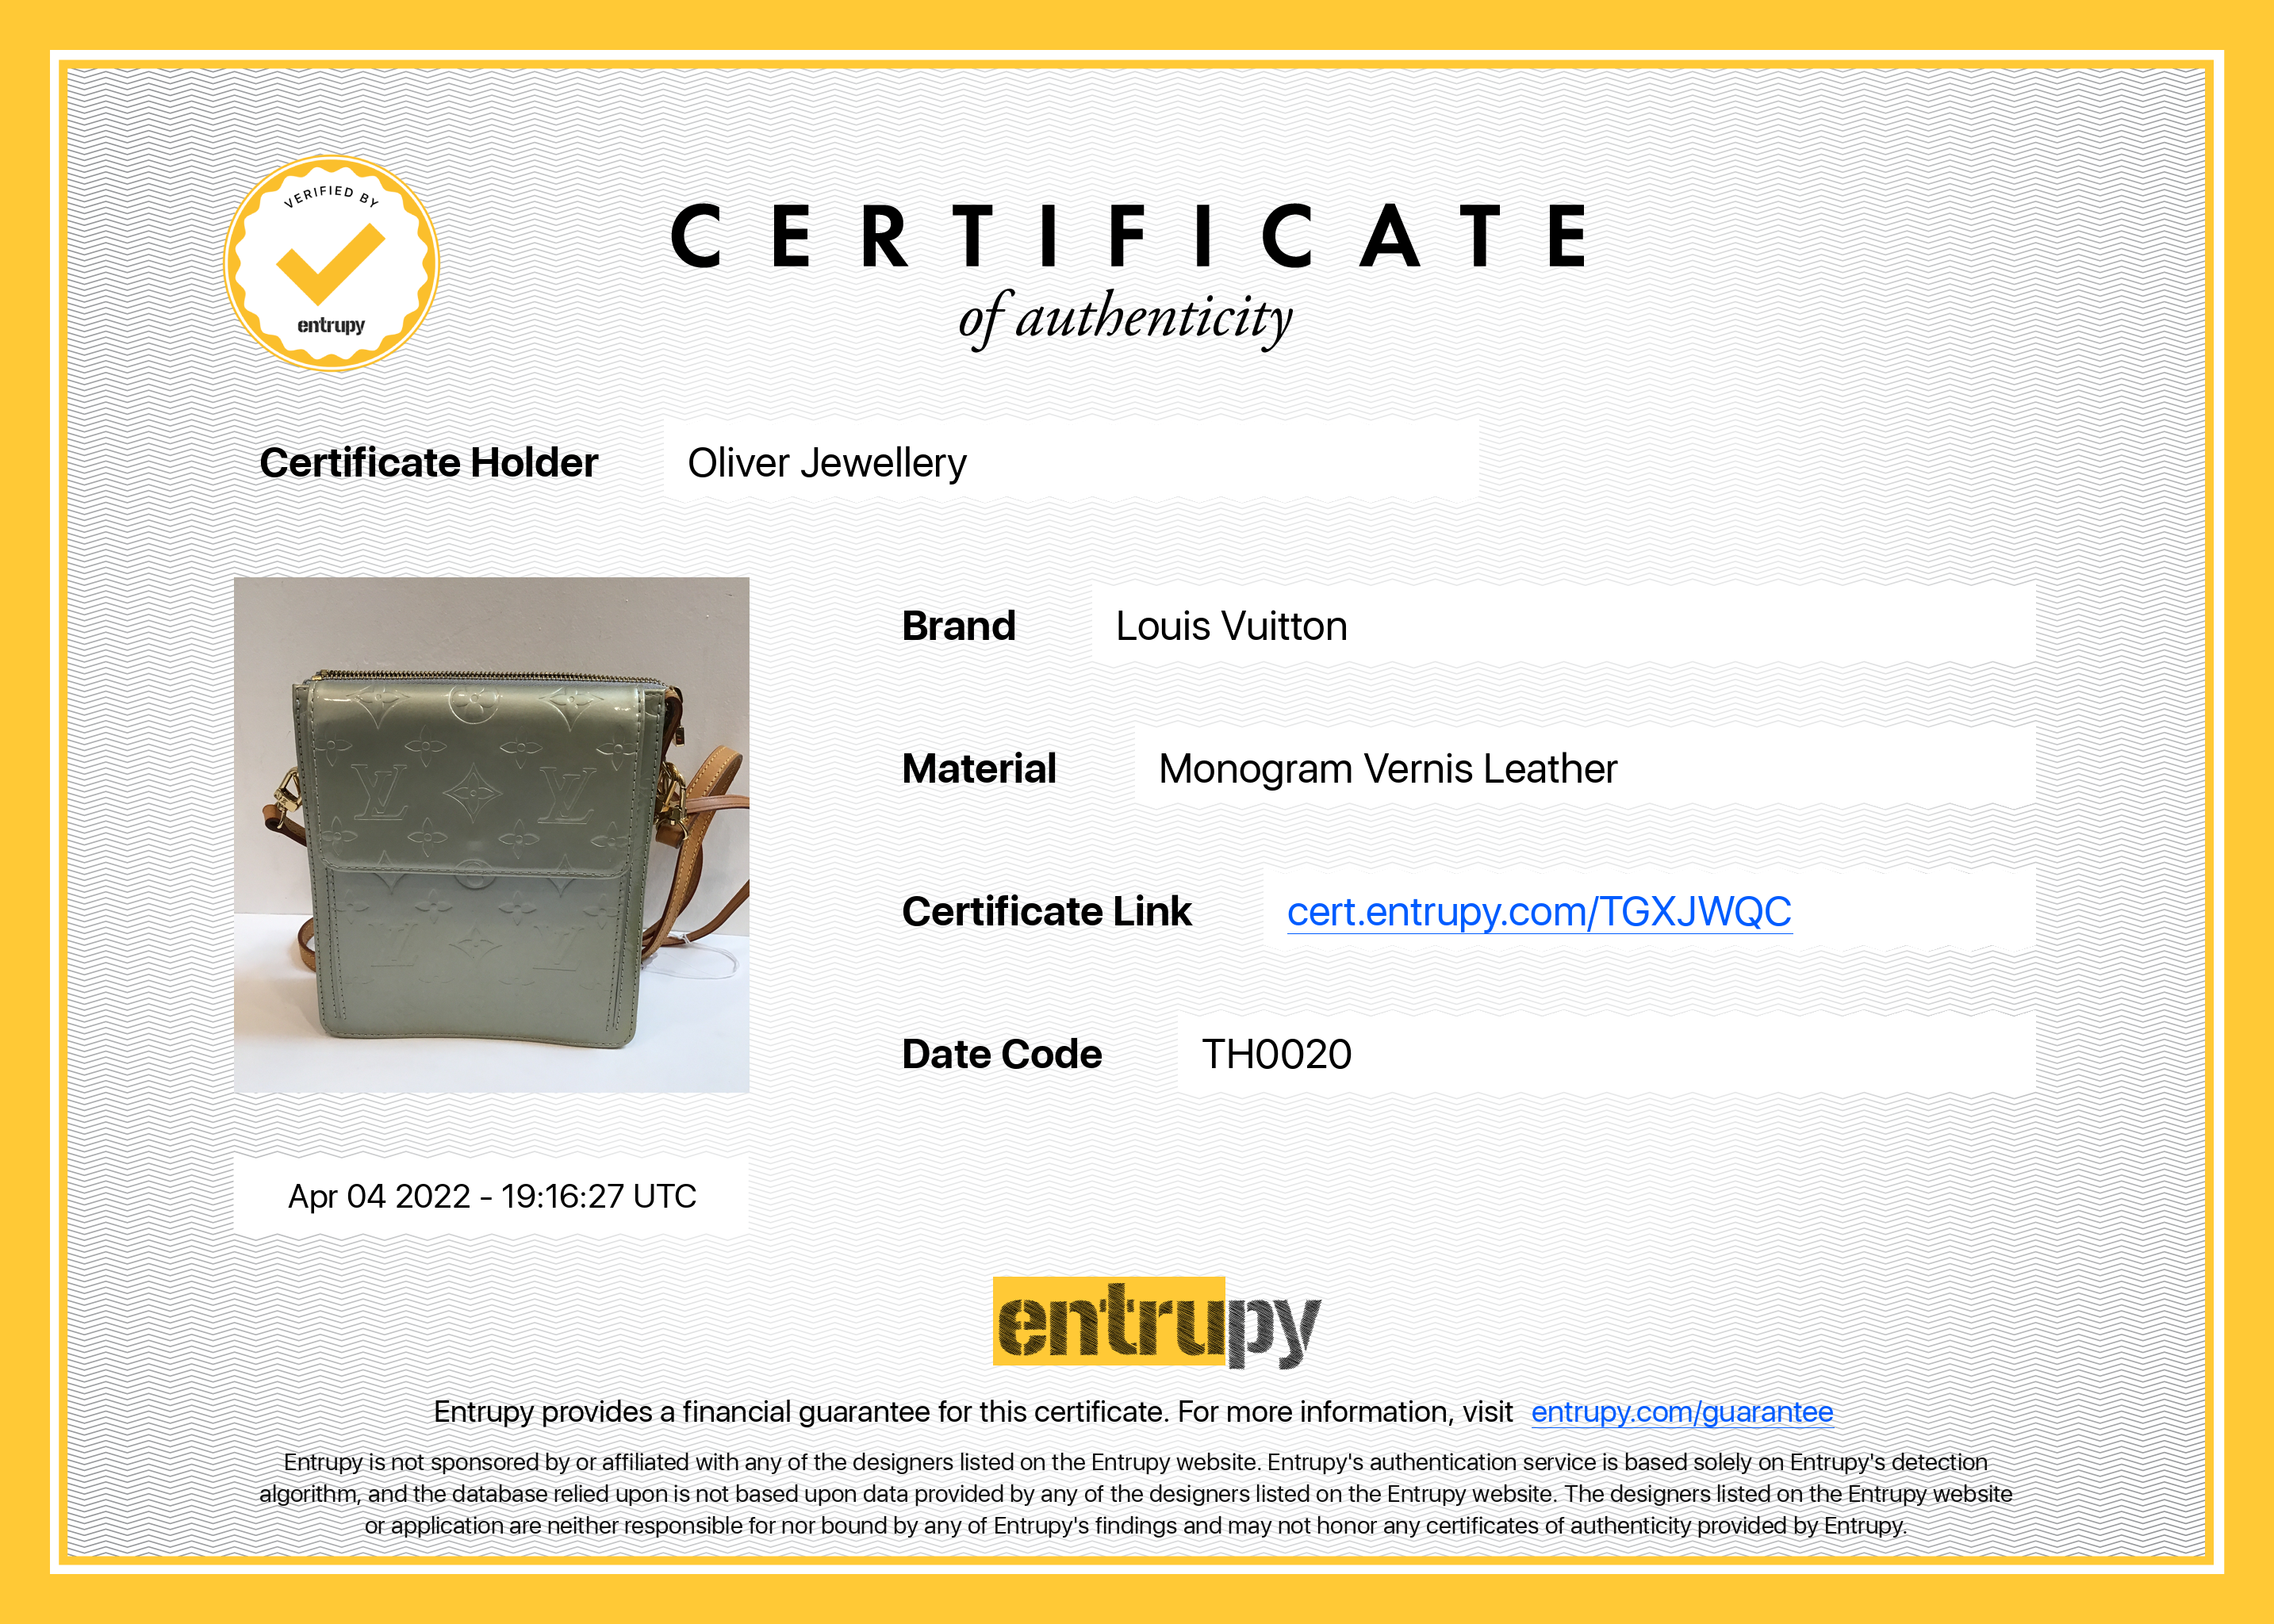 Louis-Vuitton-Monogram-Vernis-Mott-Shoulder-Bag-Indigo-M91338